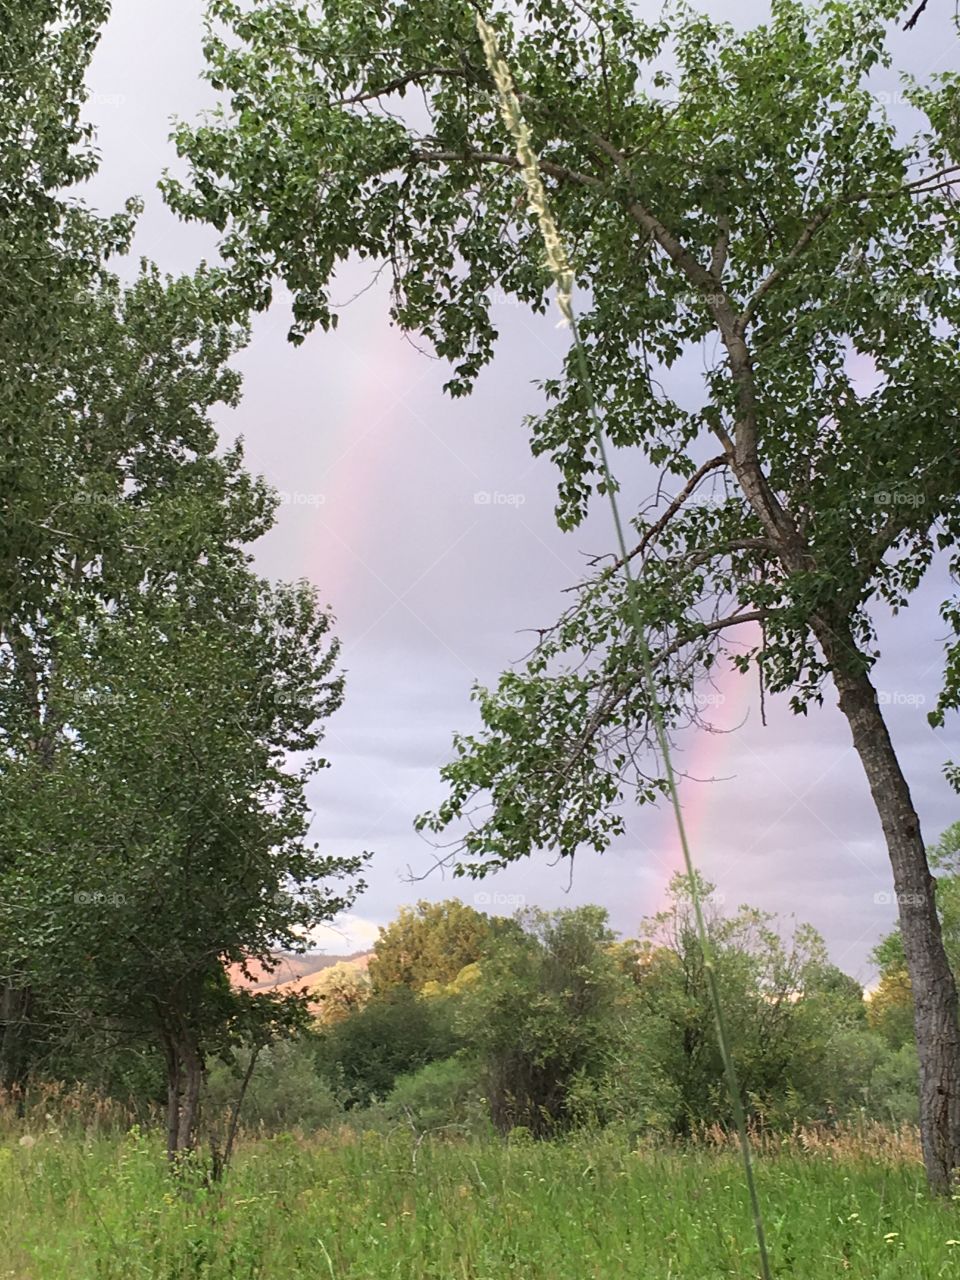 Double rainbow 
Missoula, MT